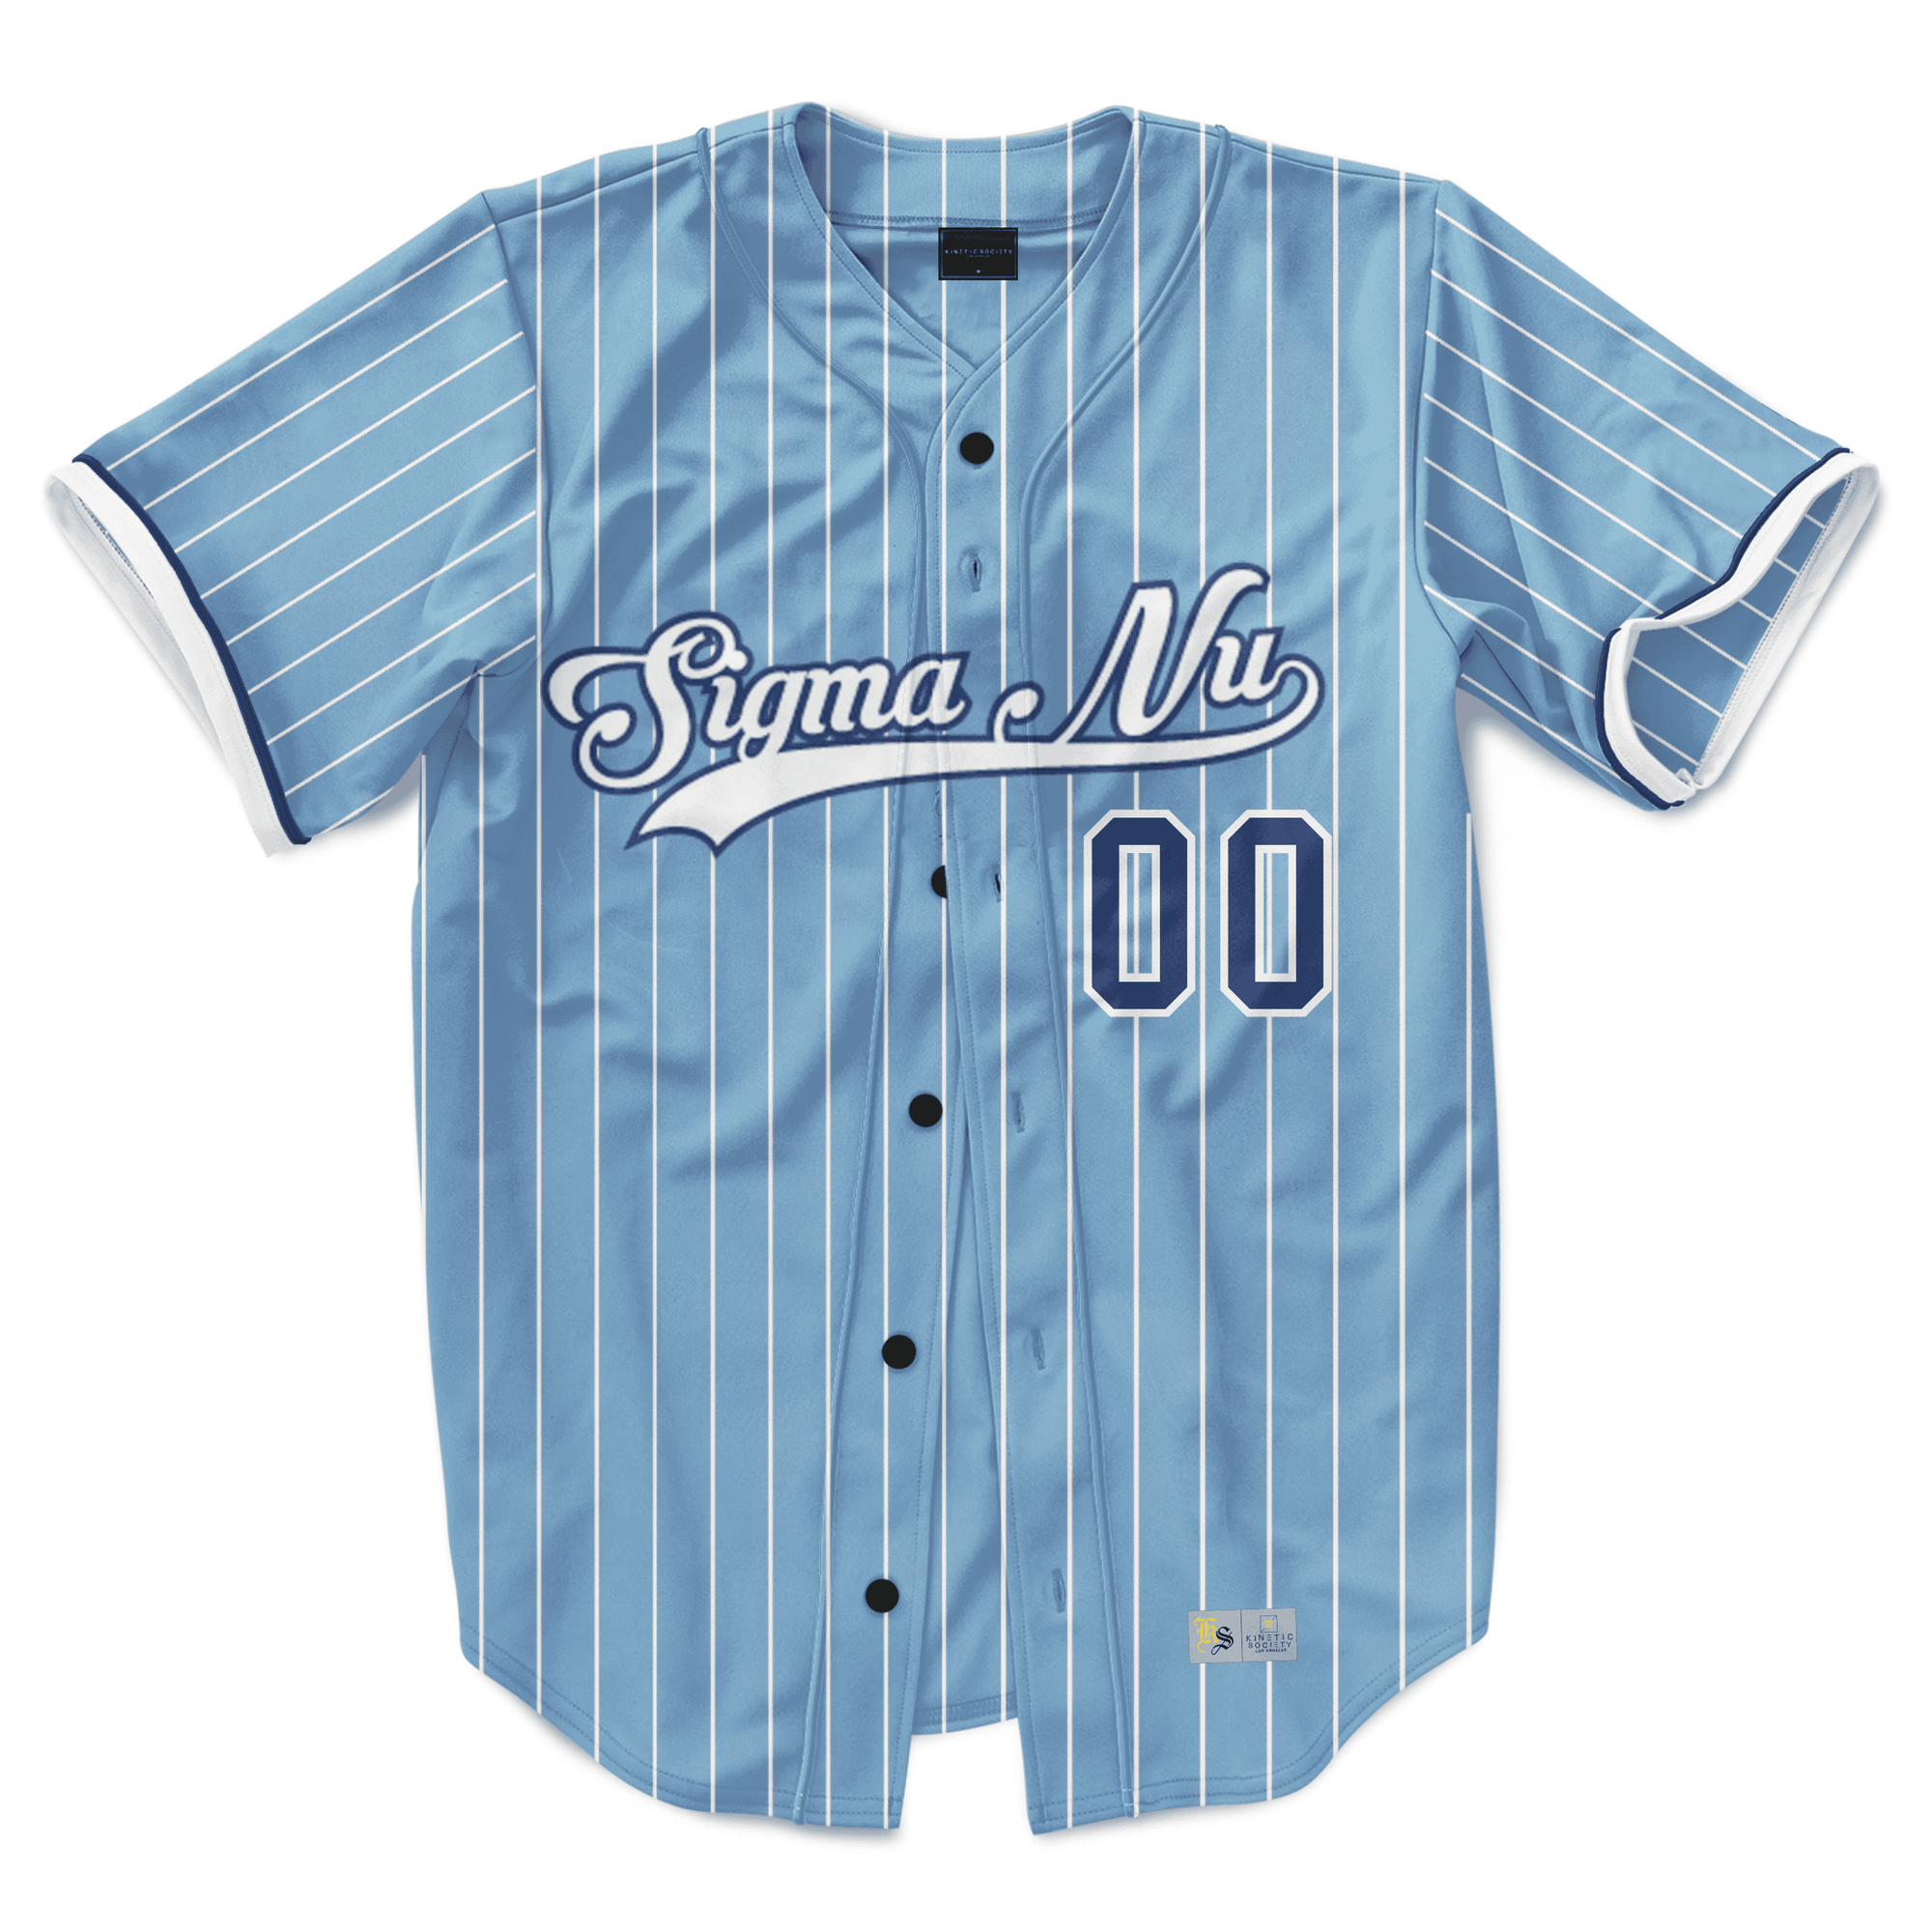 Sigma Nu - Blue Shade Baseball Jersey